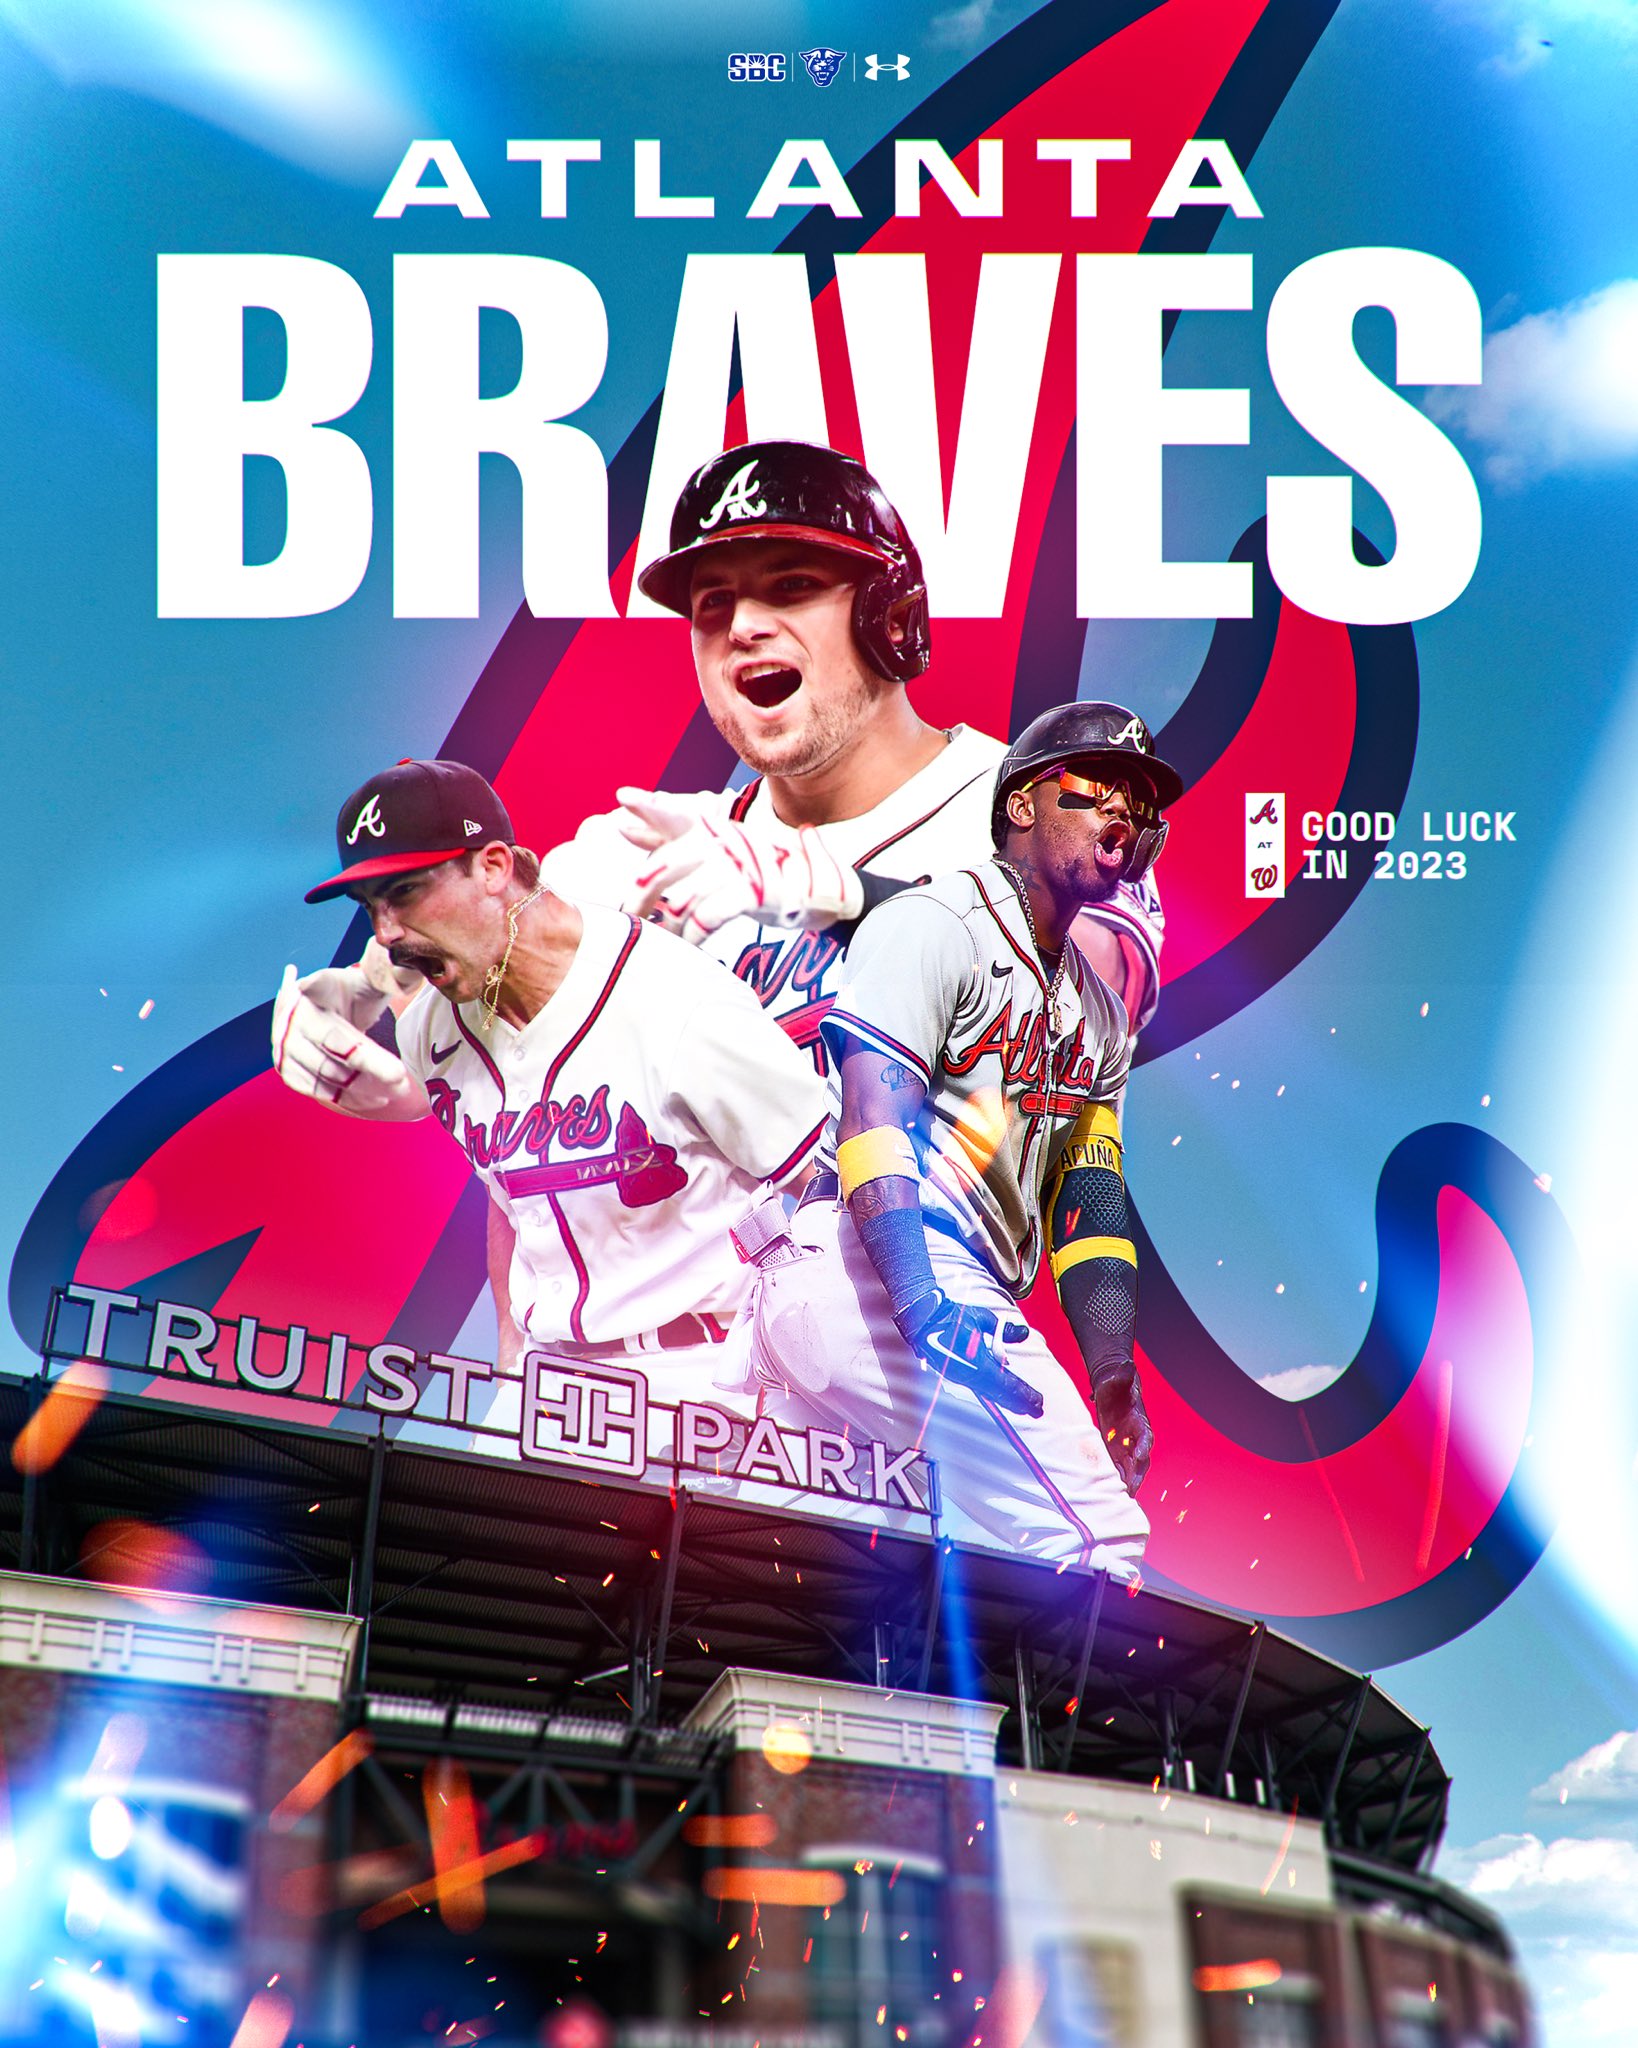 Atlanta Braves on X: RT @GSUPanthers: 𝐇𝐚𝐩𝐩𝐲 𝐎𝐩𝐞𝐧𝐢𝐧𝐠 𝐃𝐚𝐲!  Good luck this season @Braves! #